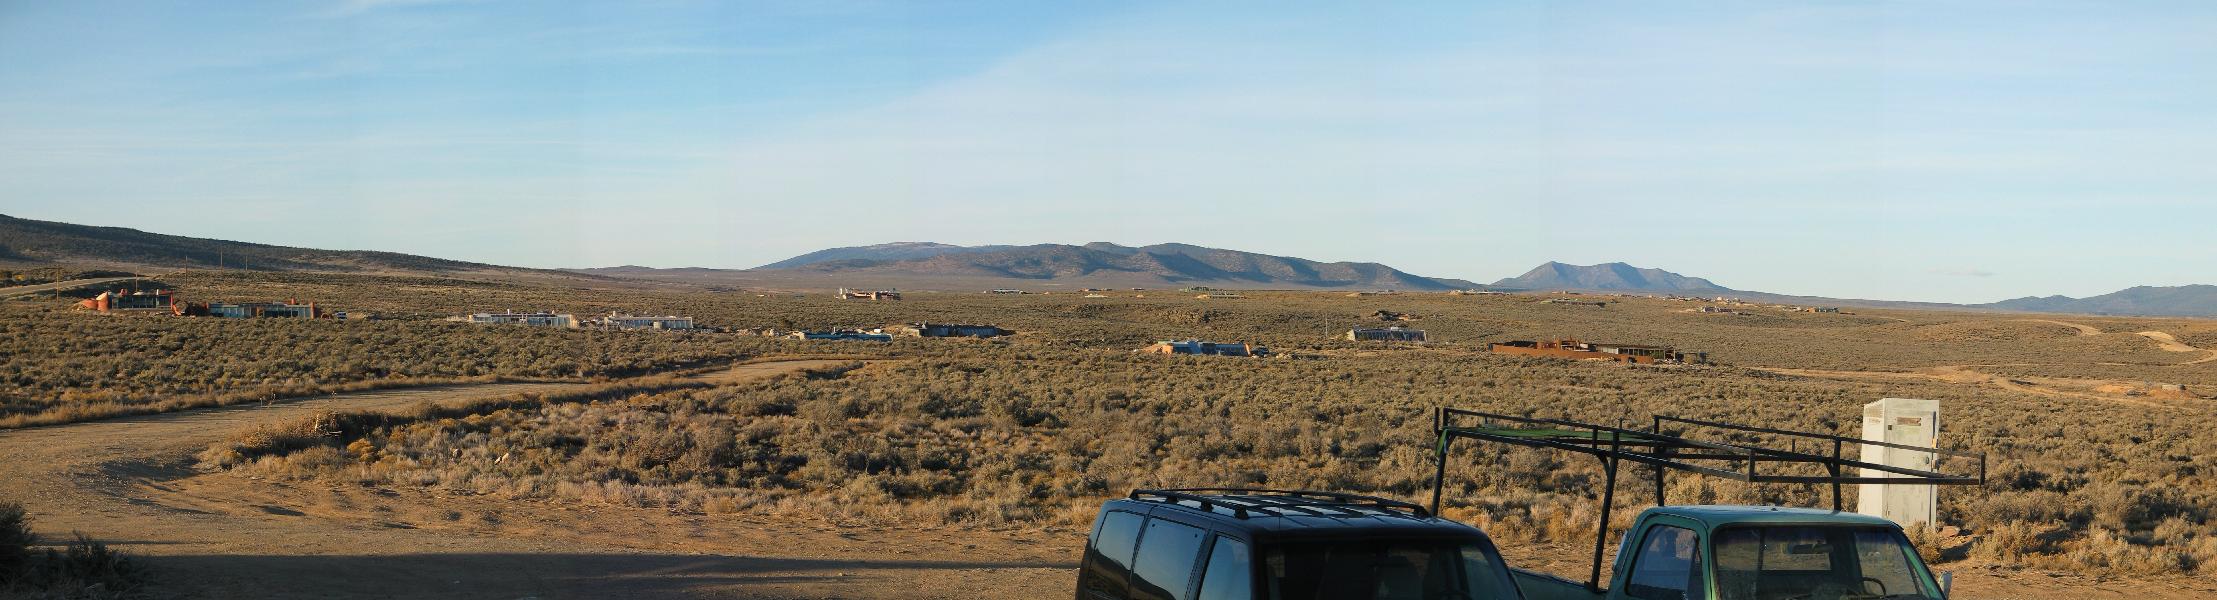 Earthship community west of Taos